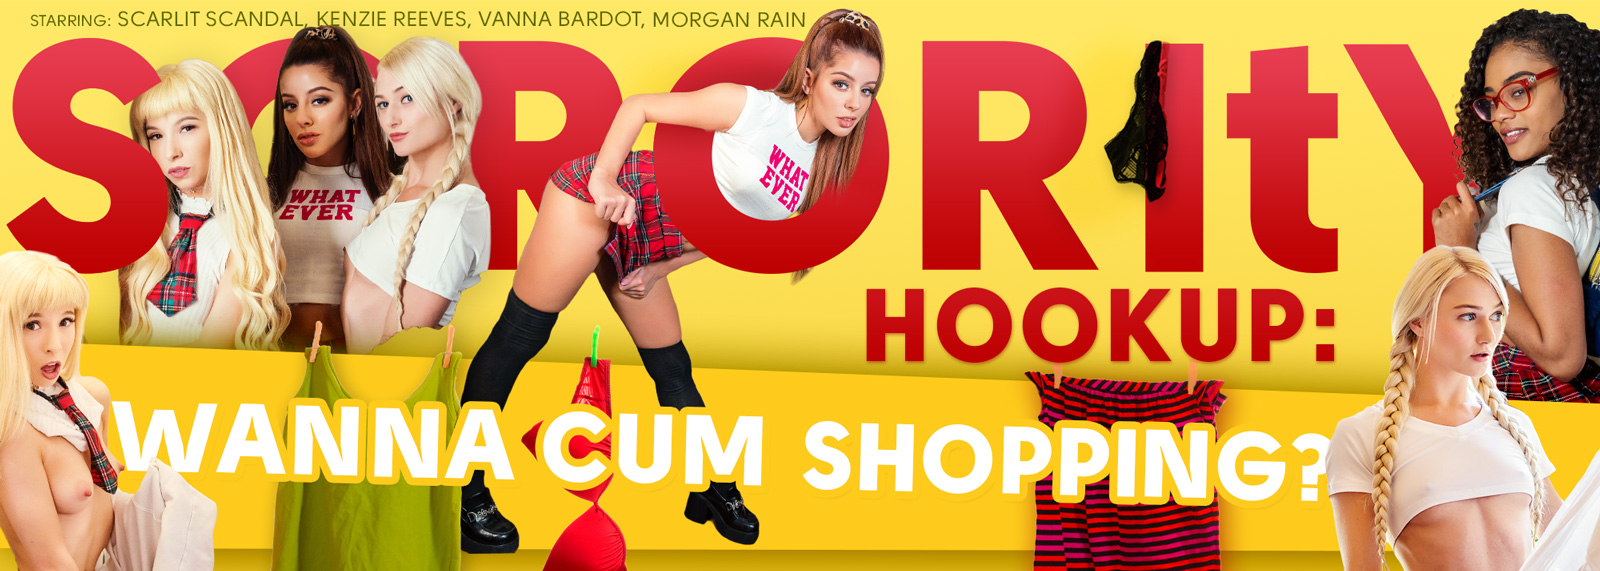 Sorority Hookup: Wanna Cum Shopping? - VR Porn Video, Starring: Morgan Rain, Scarlit Scandal, Vanna Bardot, Kenzie Reeves